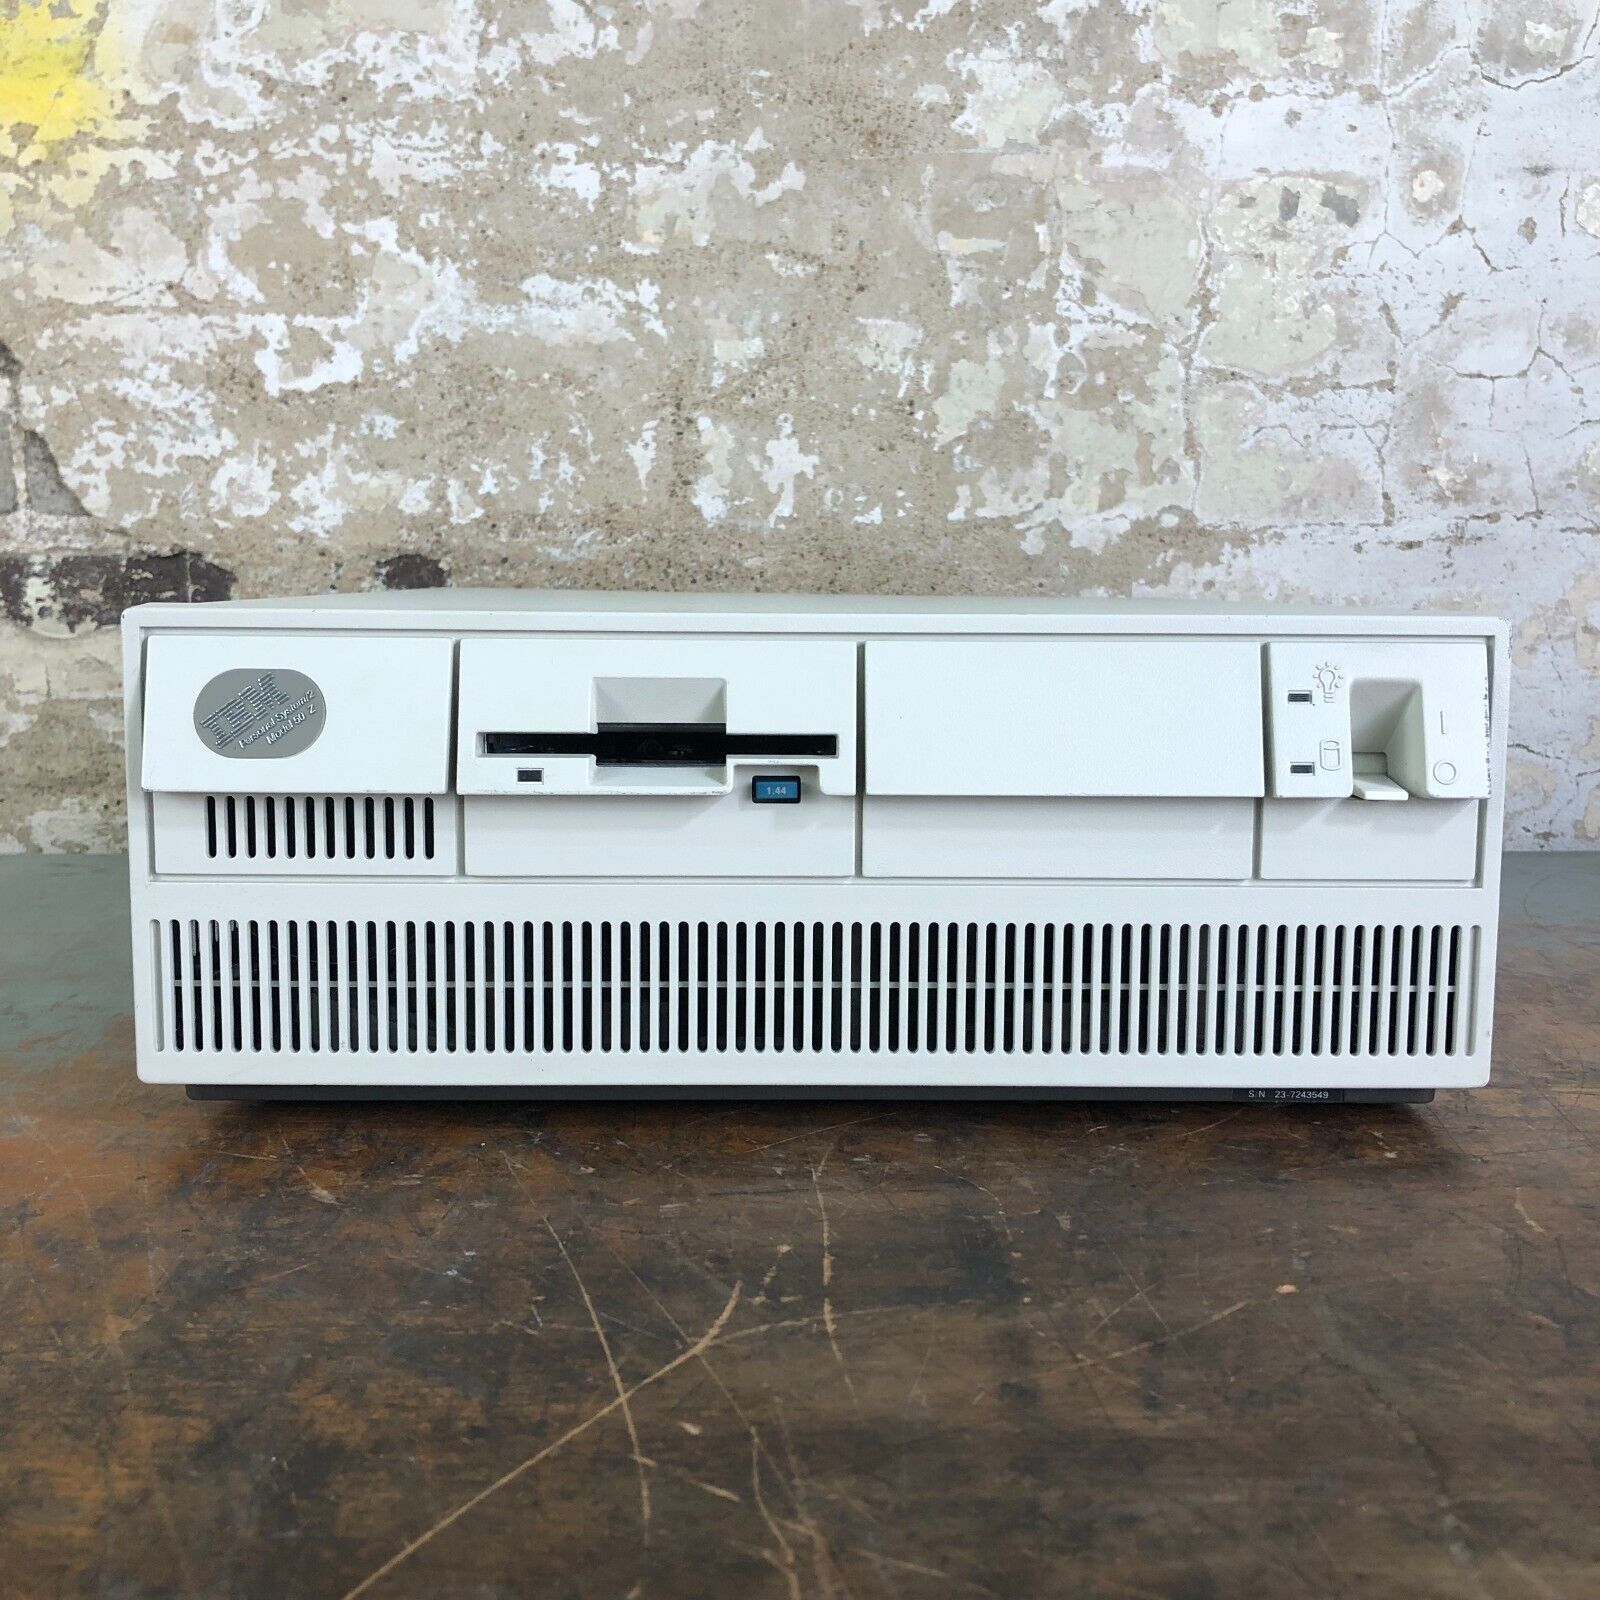 IBM PS/2 Model 50 Z Computer 8550 **Great Restoration Candidate - Complete